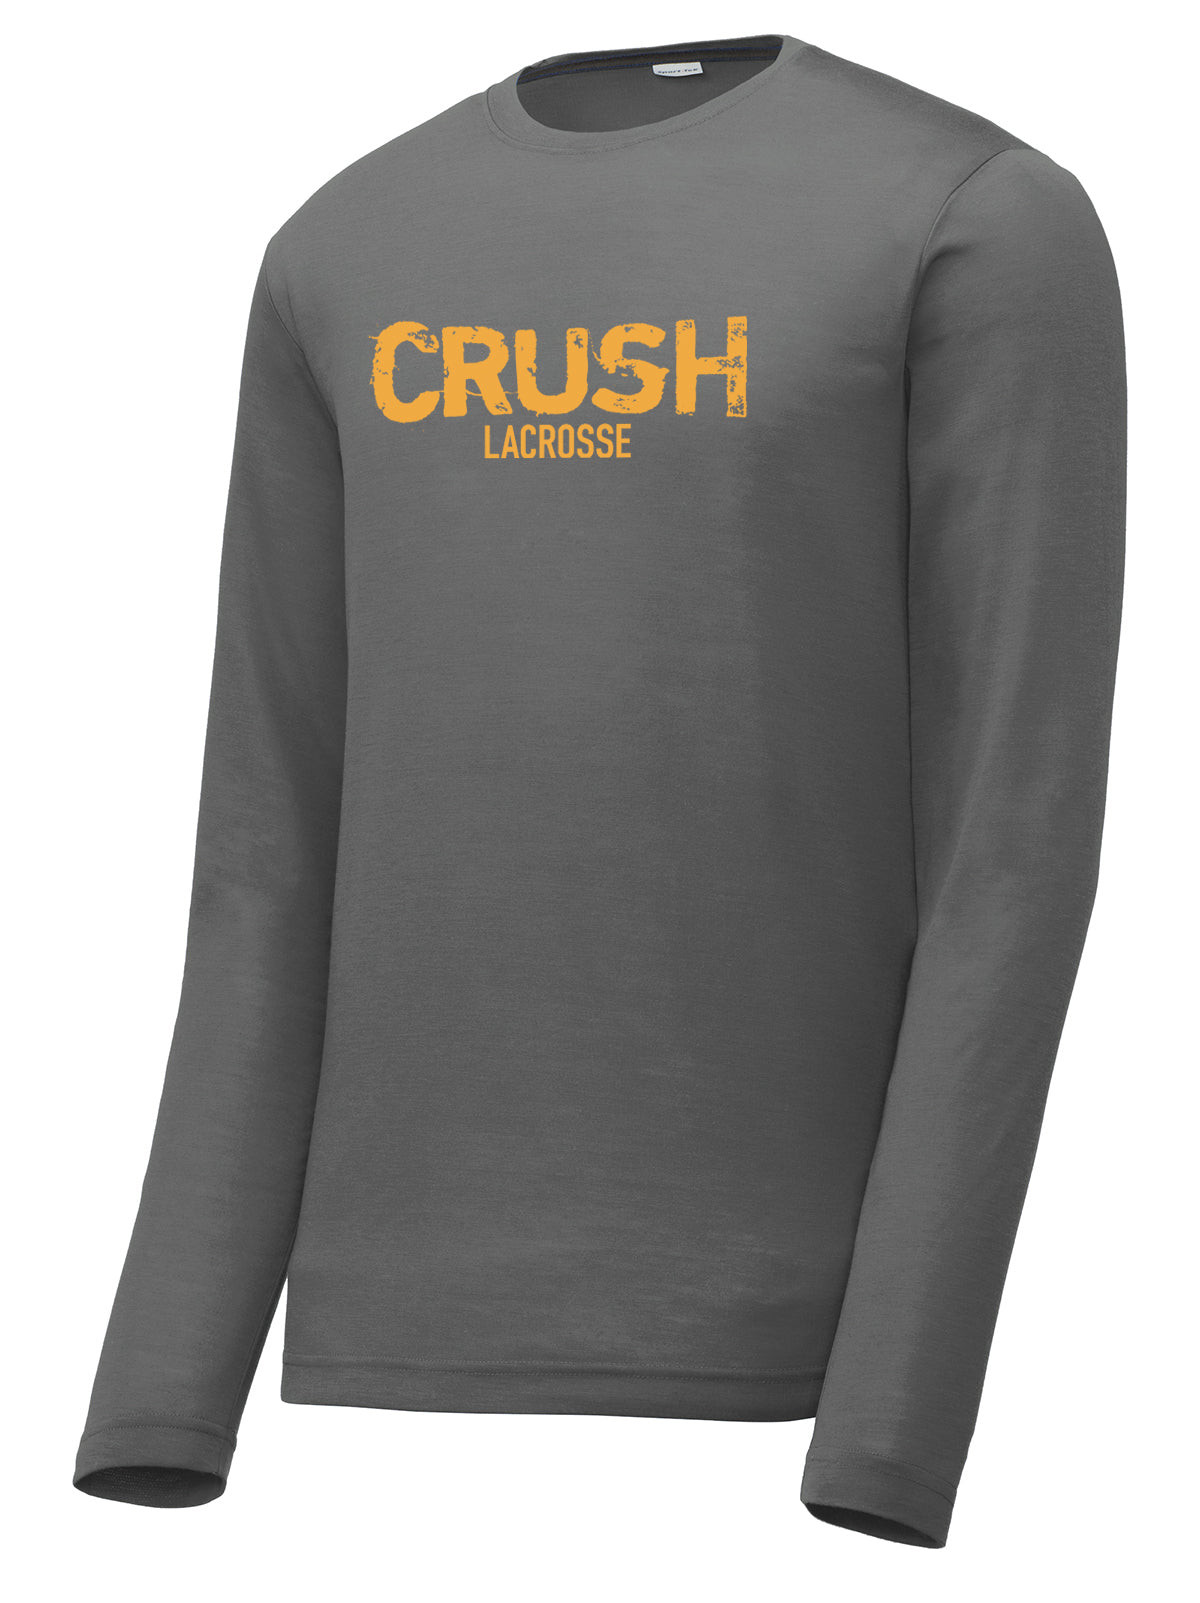 Crush Lacrosse Smoke Grey Long Sleeve CottonTouch Performance Shirt